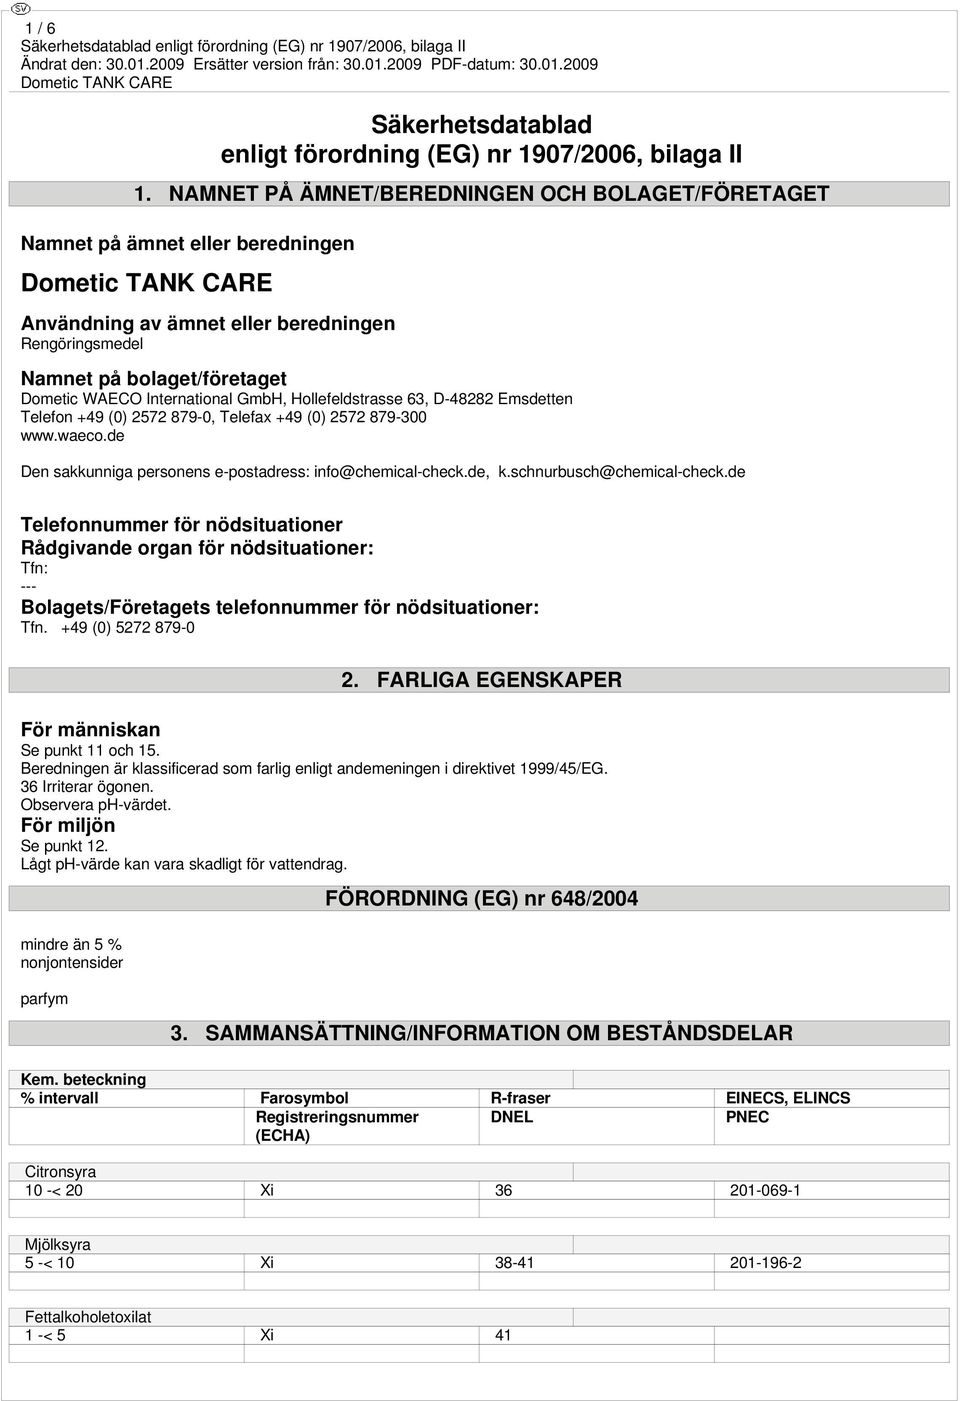 Hollefeldstrasse 63, D-48282 Emsdetten Telefon +49 (0) 2572 879-0, Telefax +49 (0) 2572 879-300 www.waeco.de Den sakkunniga personens e-postadress: info@chemical-check.de, k.